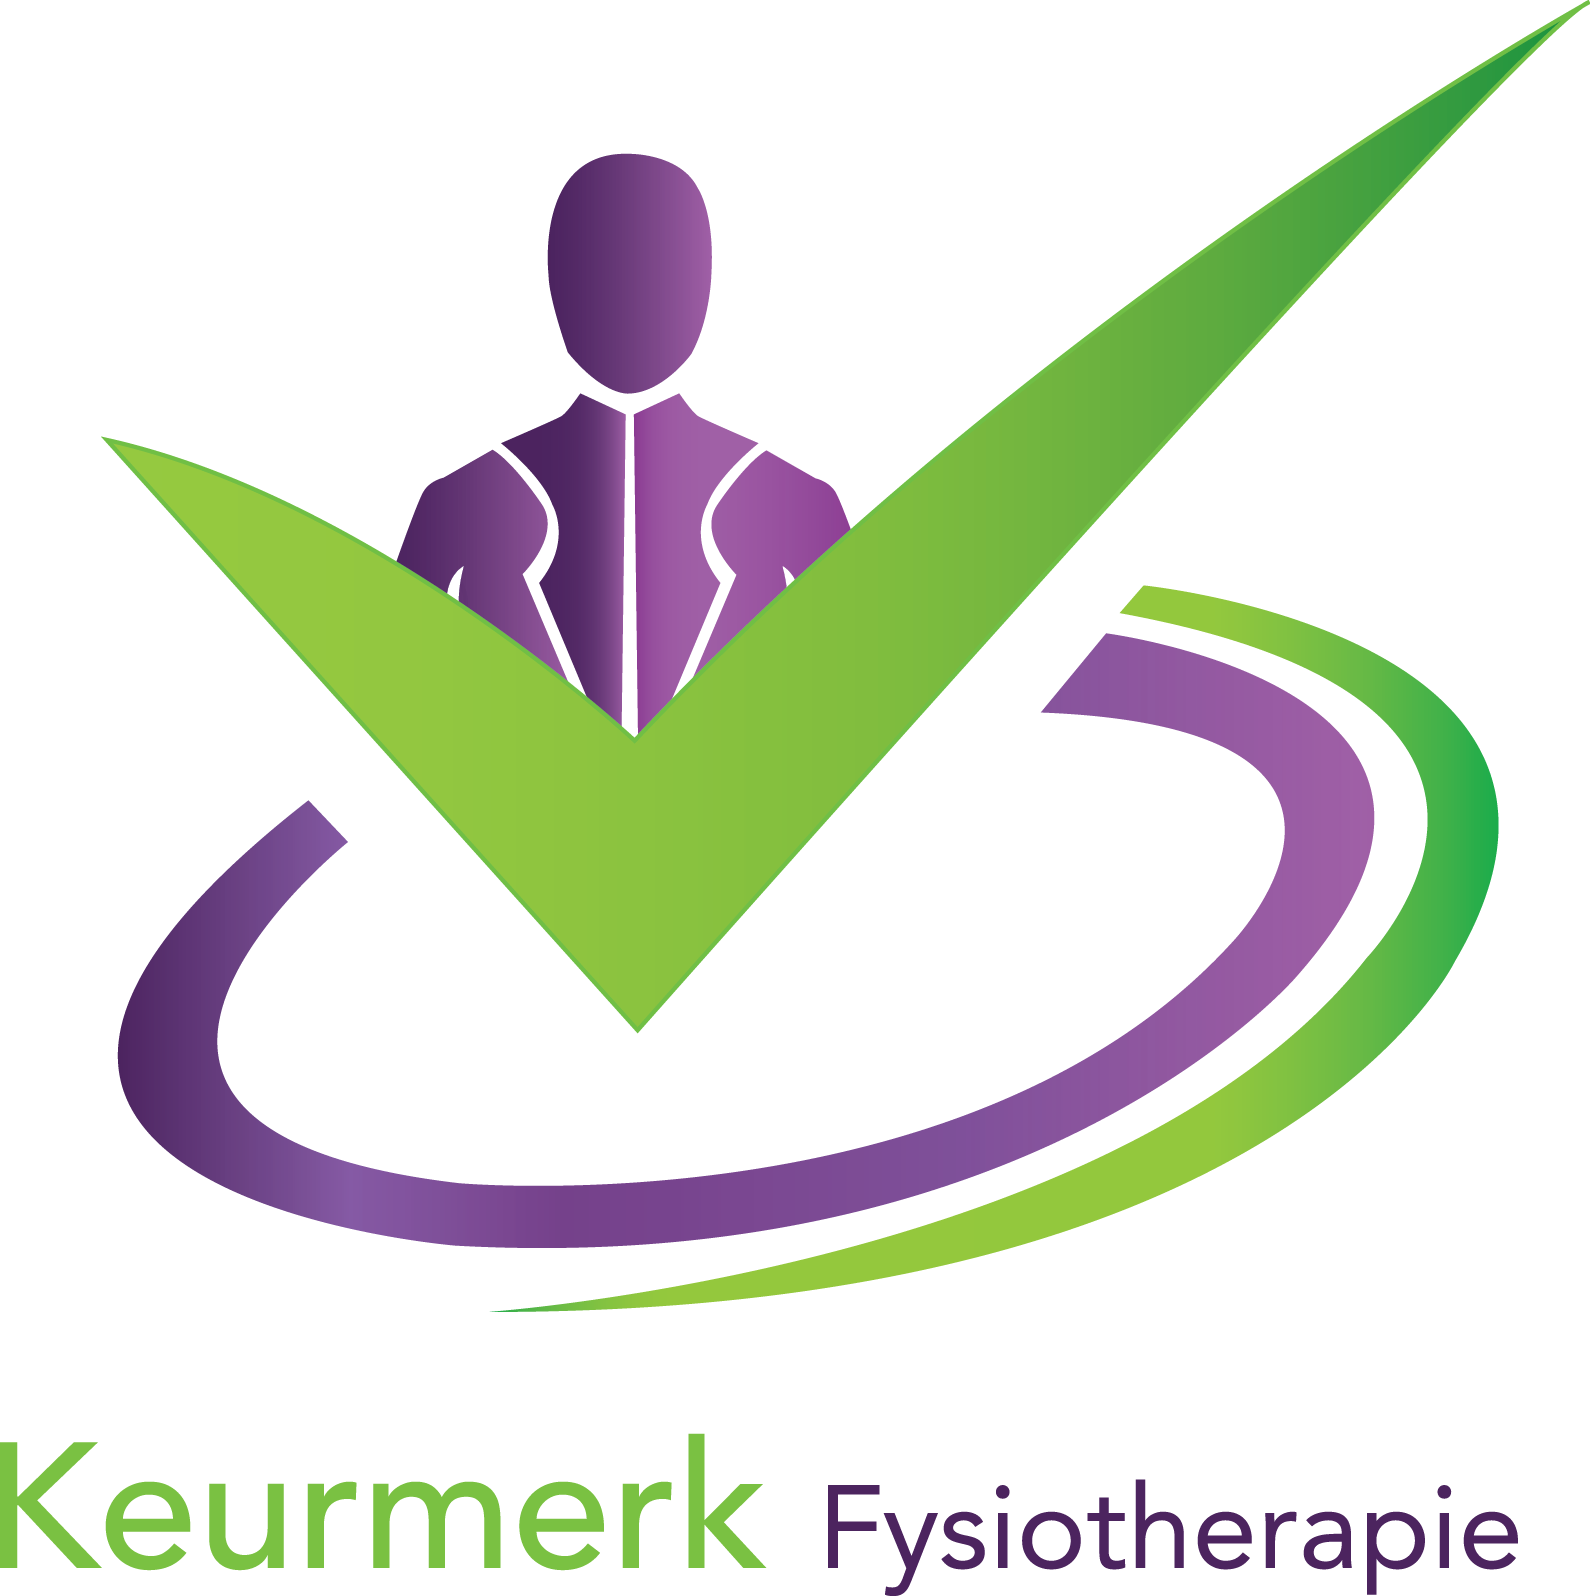 keurmerk fysiotherapie logo